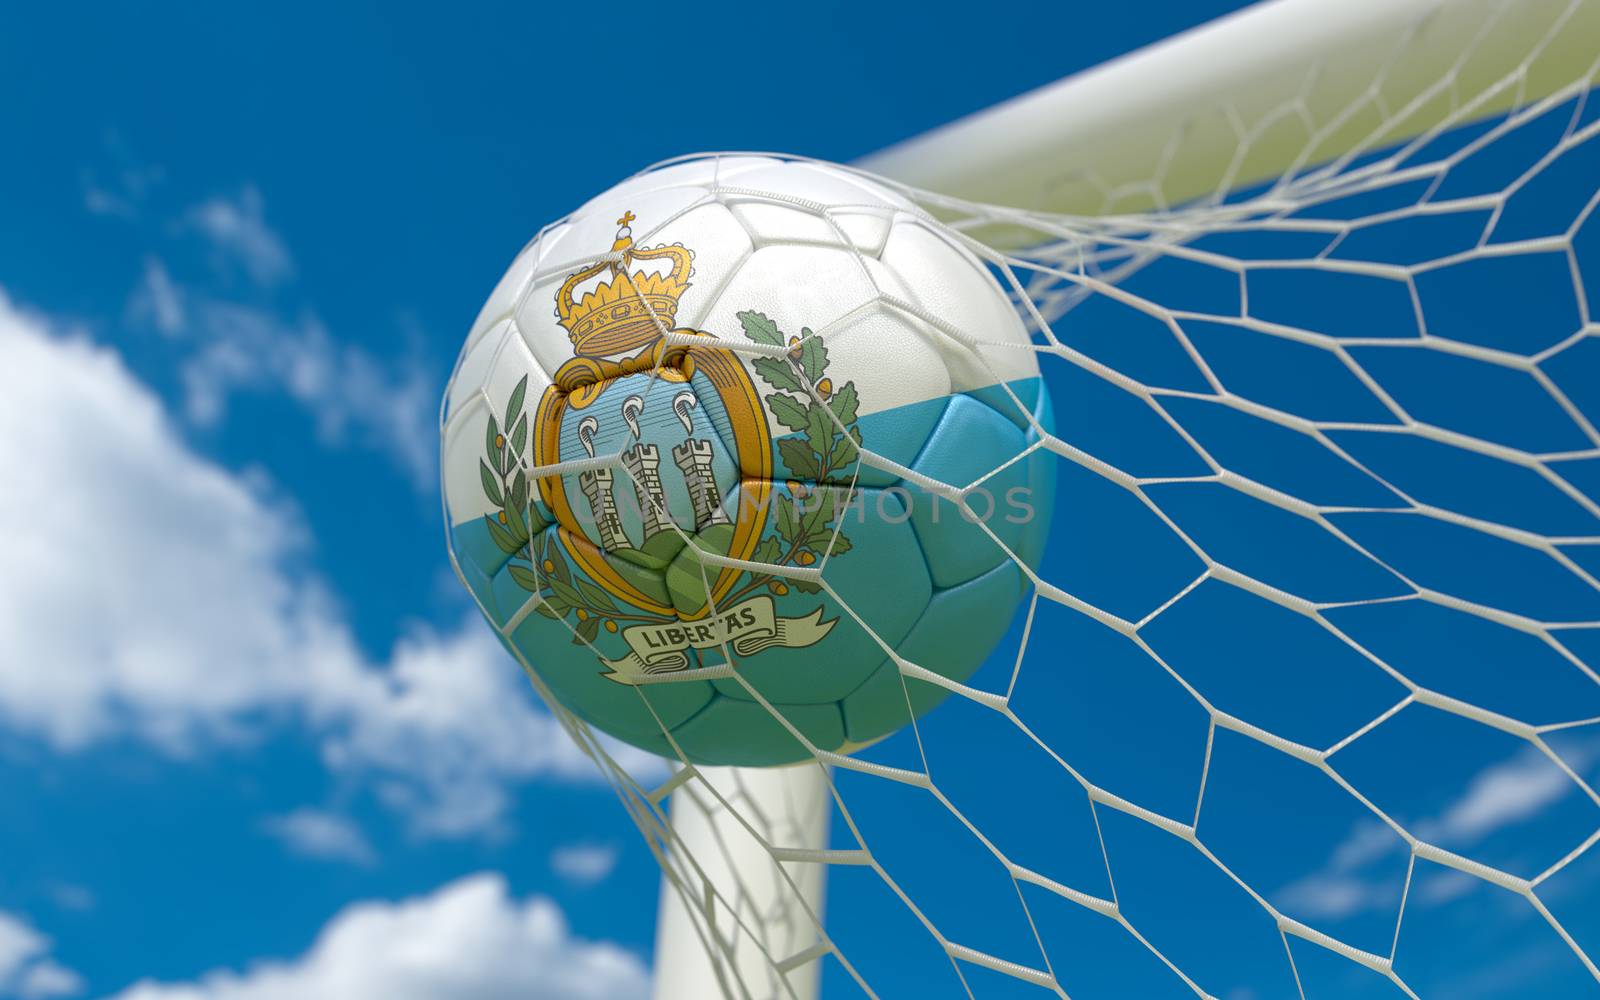 San Marino flag and soccer ball, football in goal net